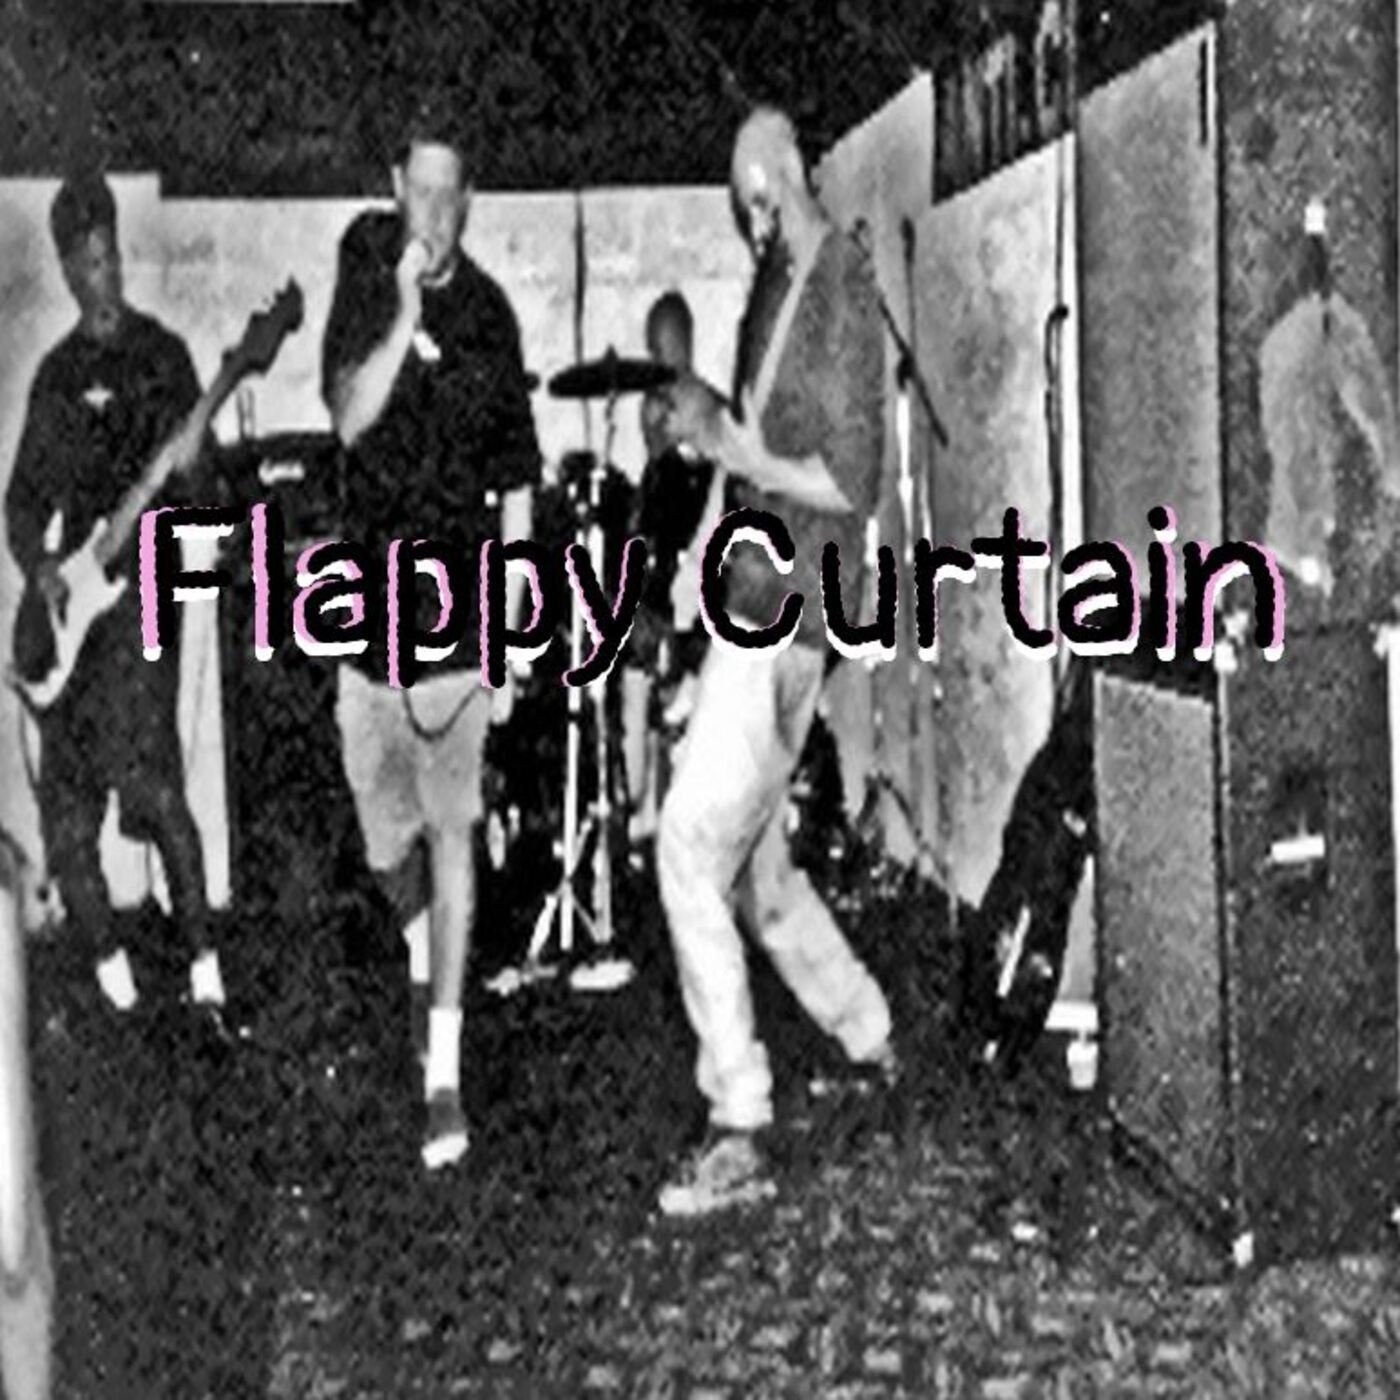 Flappy Curtain